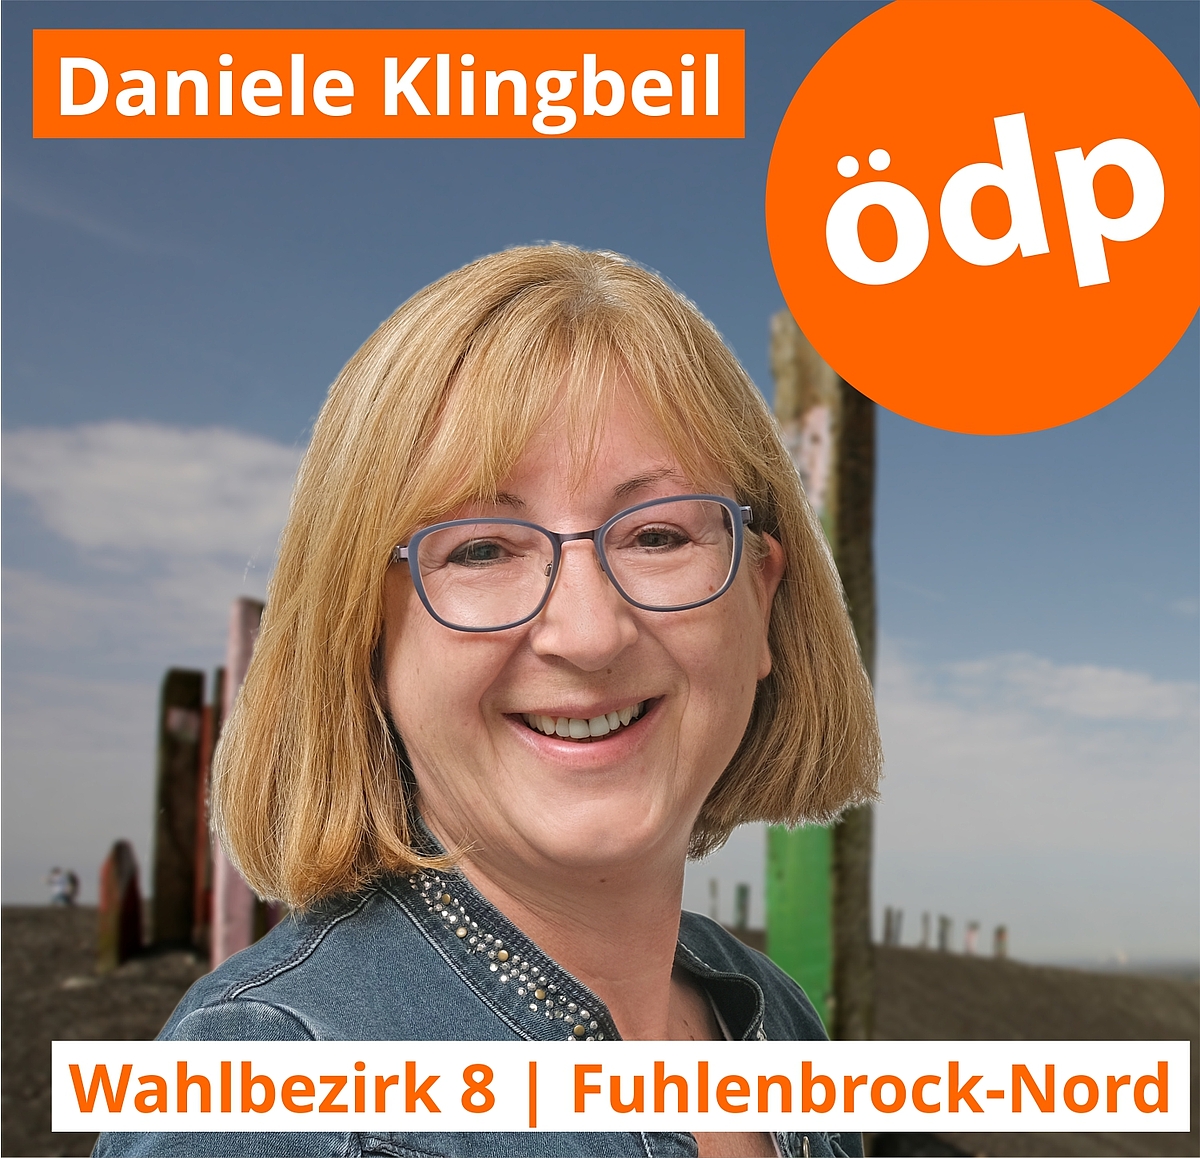 Daniele Klingbeil | Wahlbezirk 8 | Fuhlenbrock-Nord